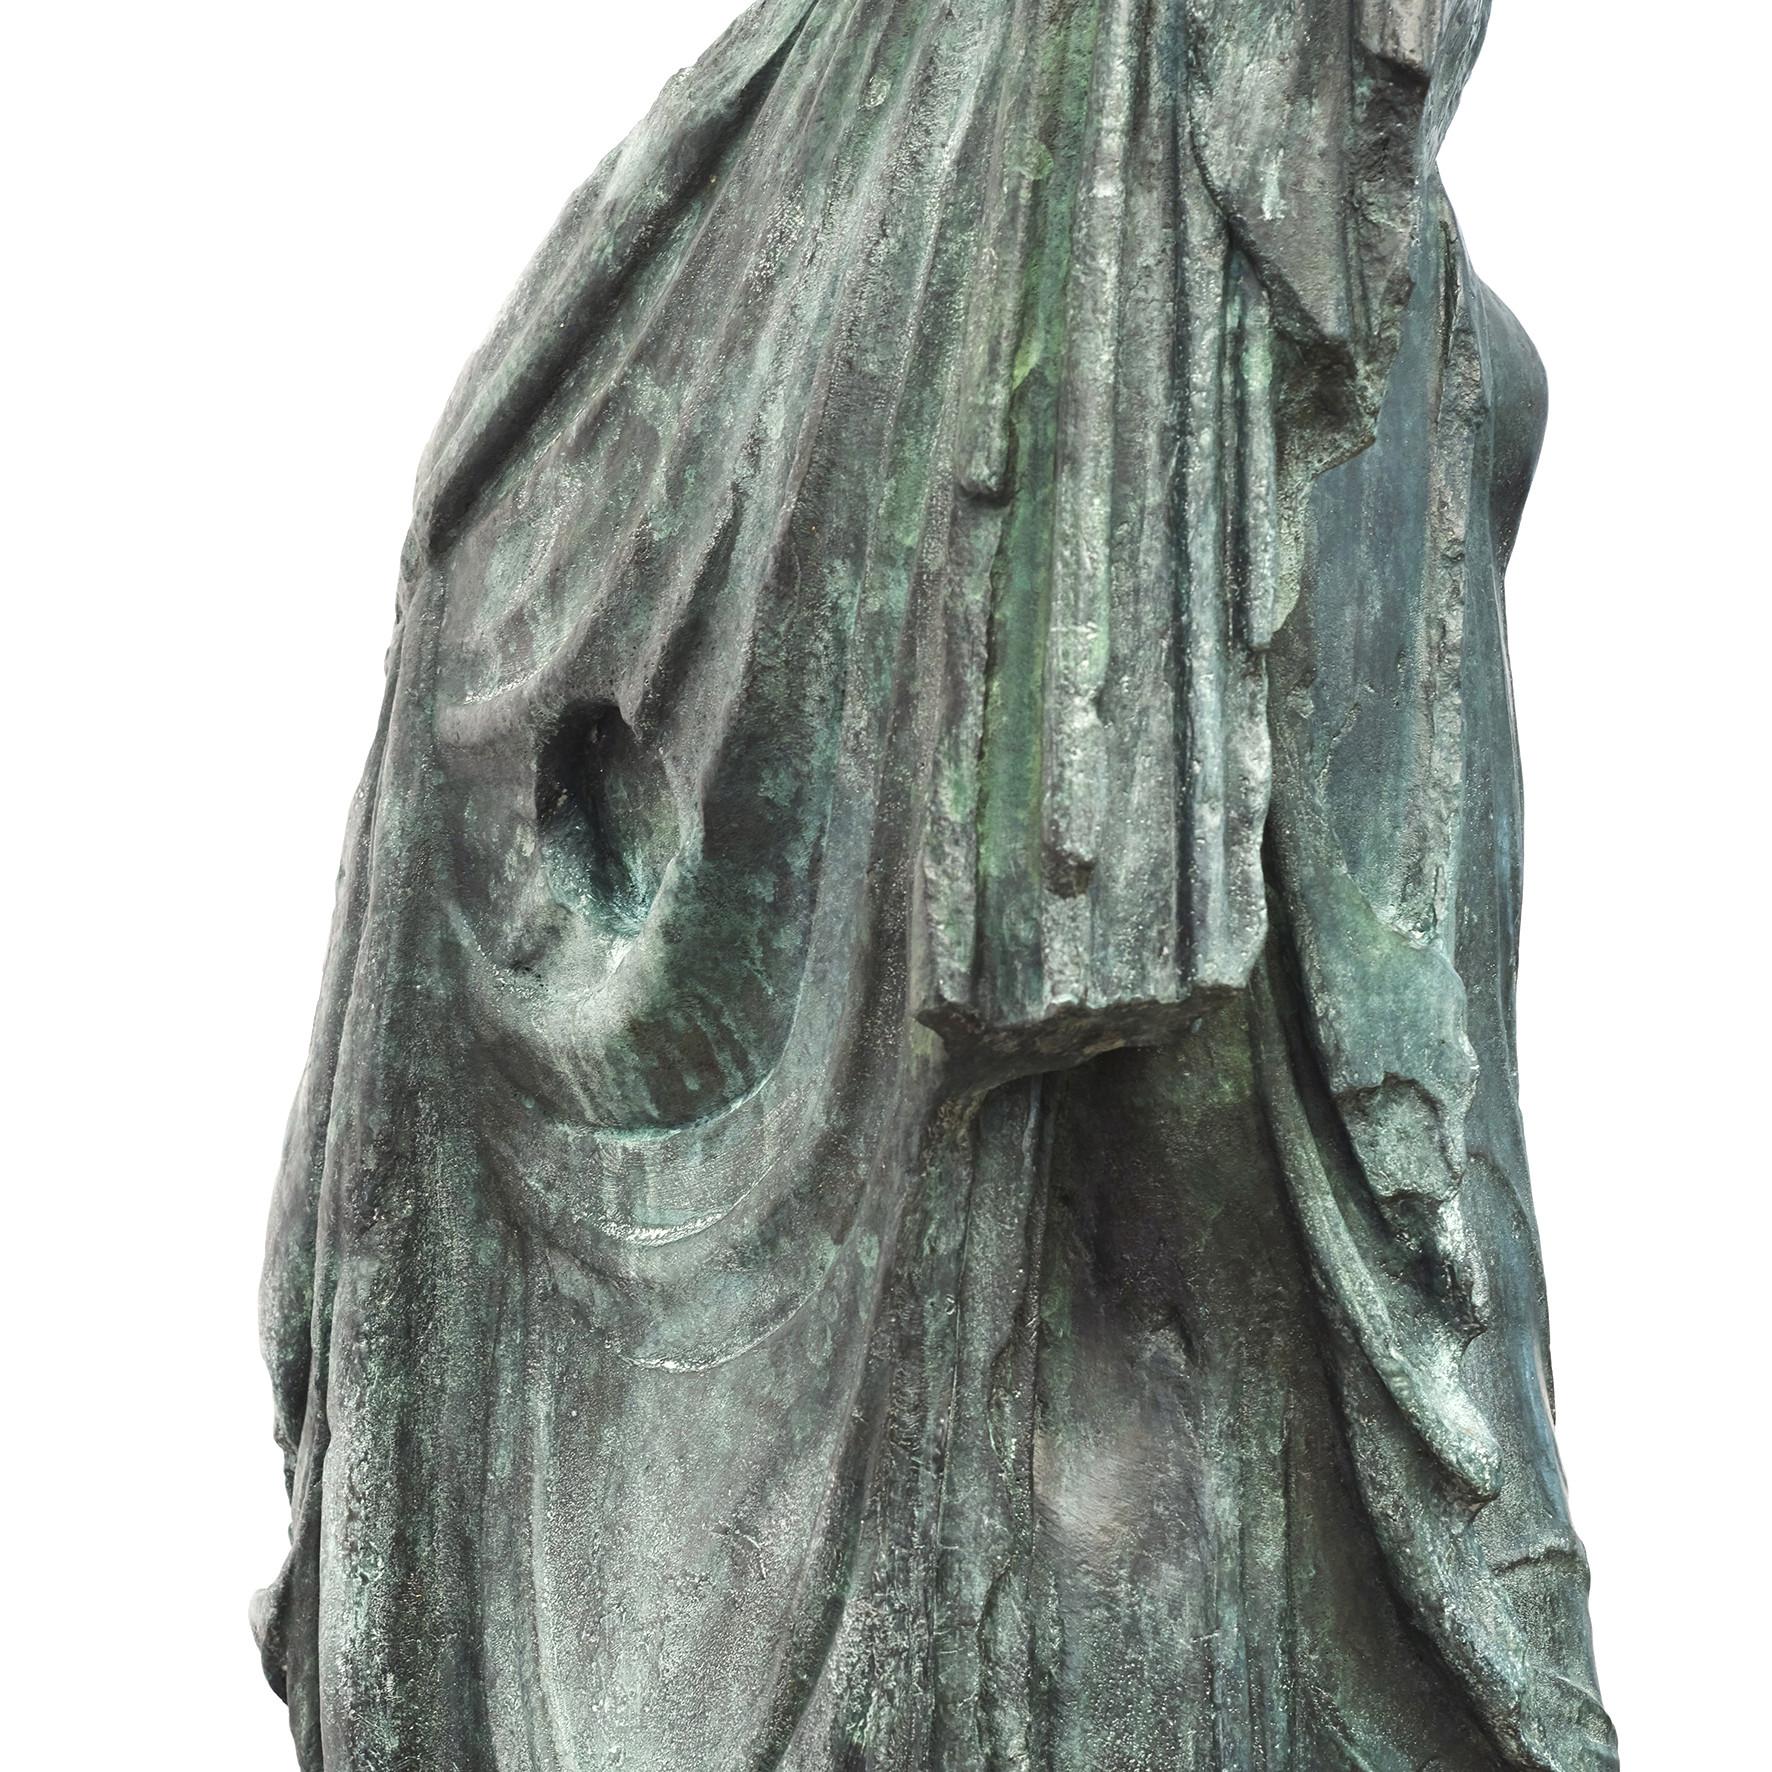 Venus Genetrix, Life-Size Bronze Statue 5